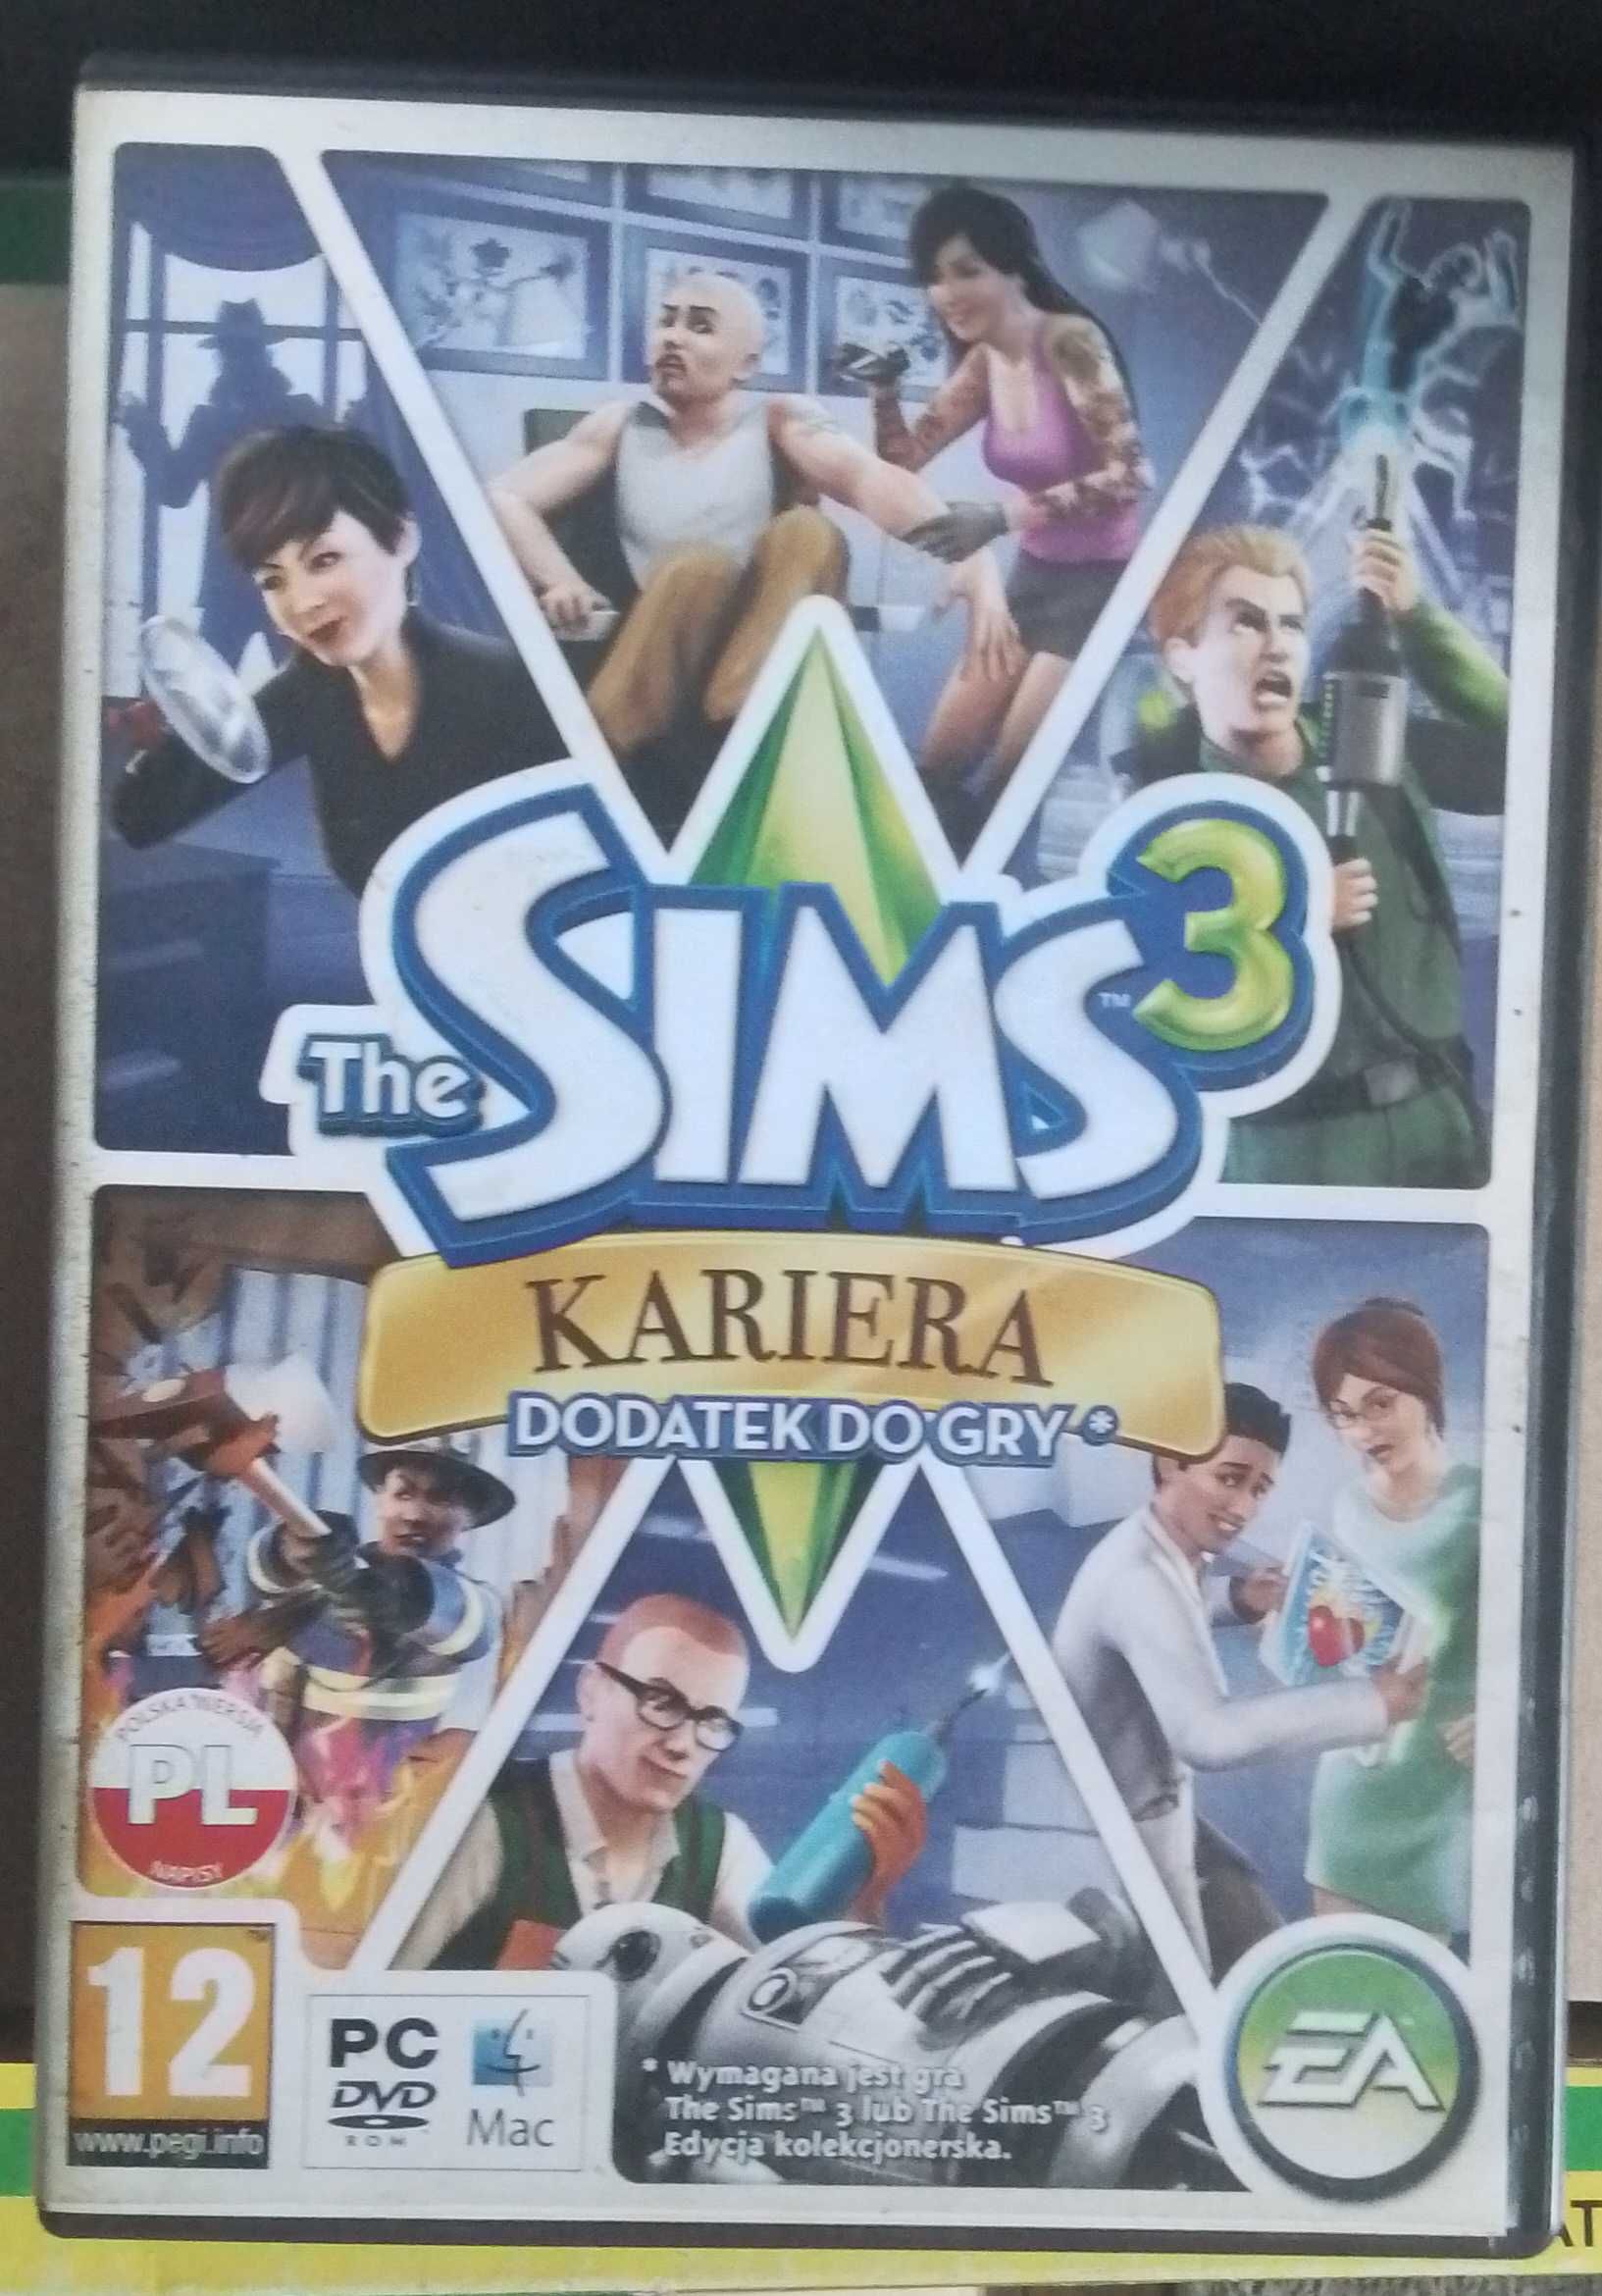 Sprzedam gry The Sims 3 + The Sims 3 Kariera